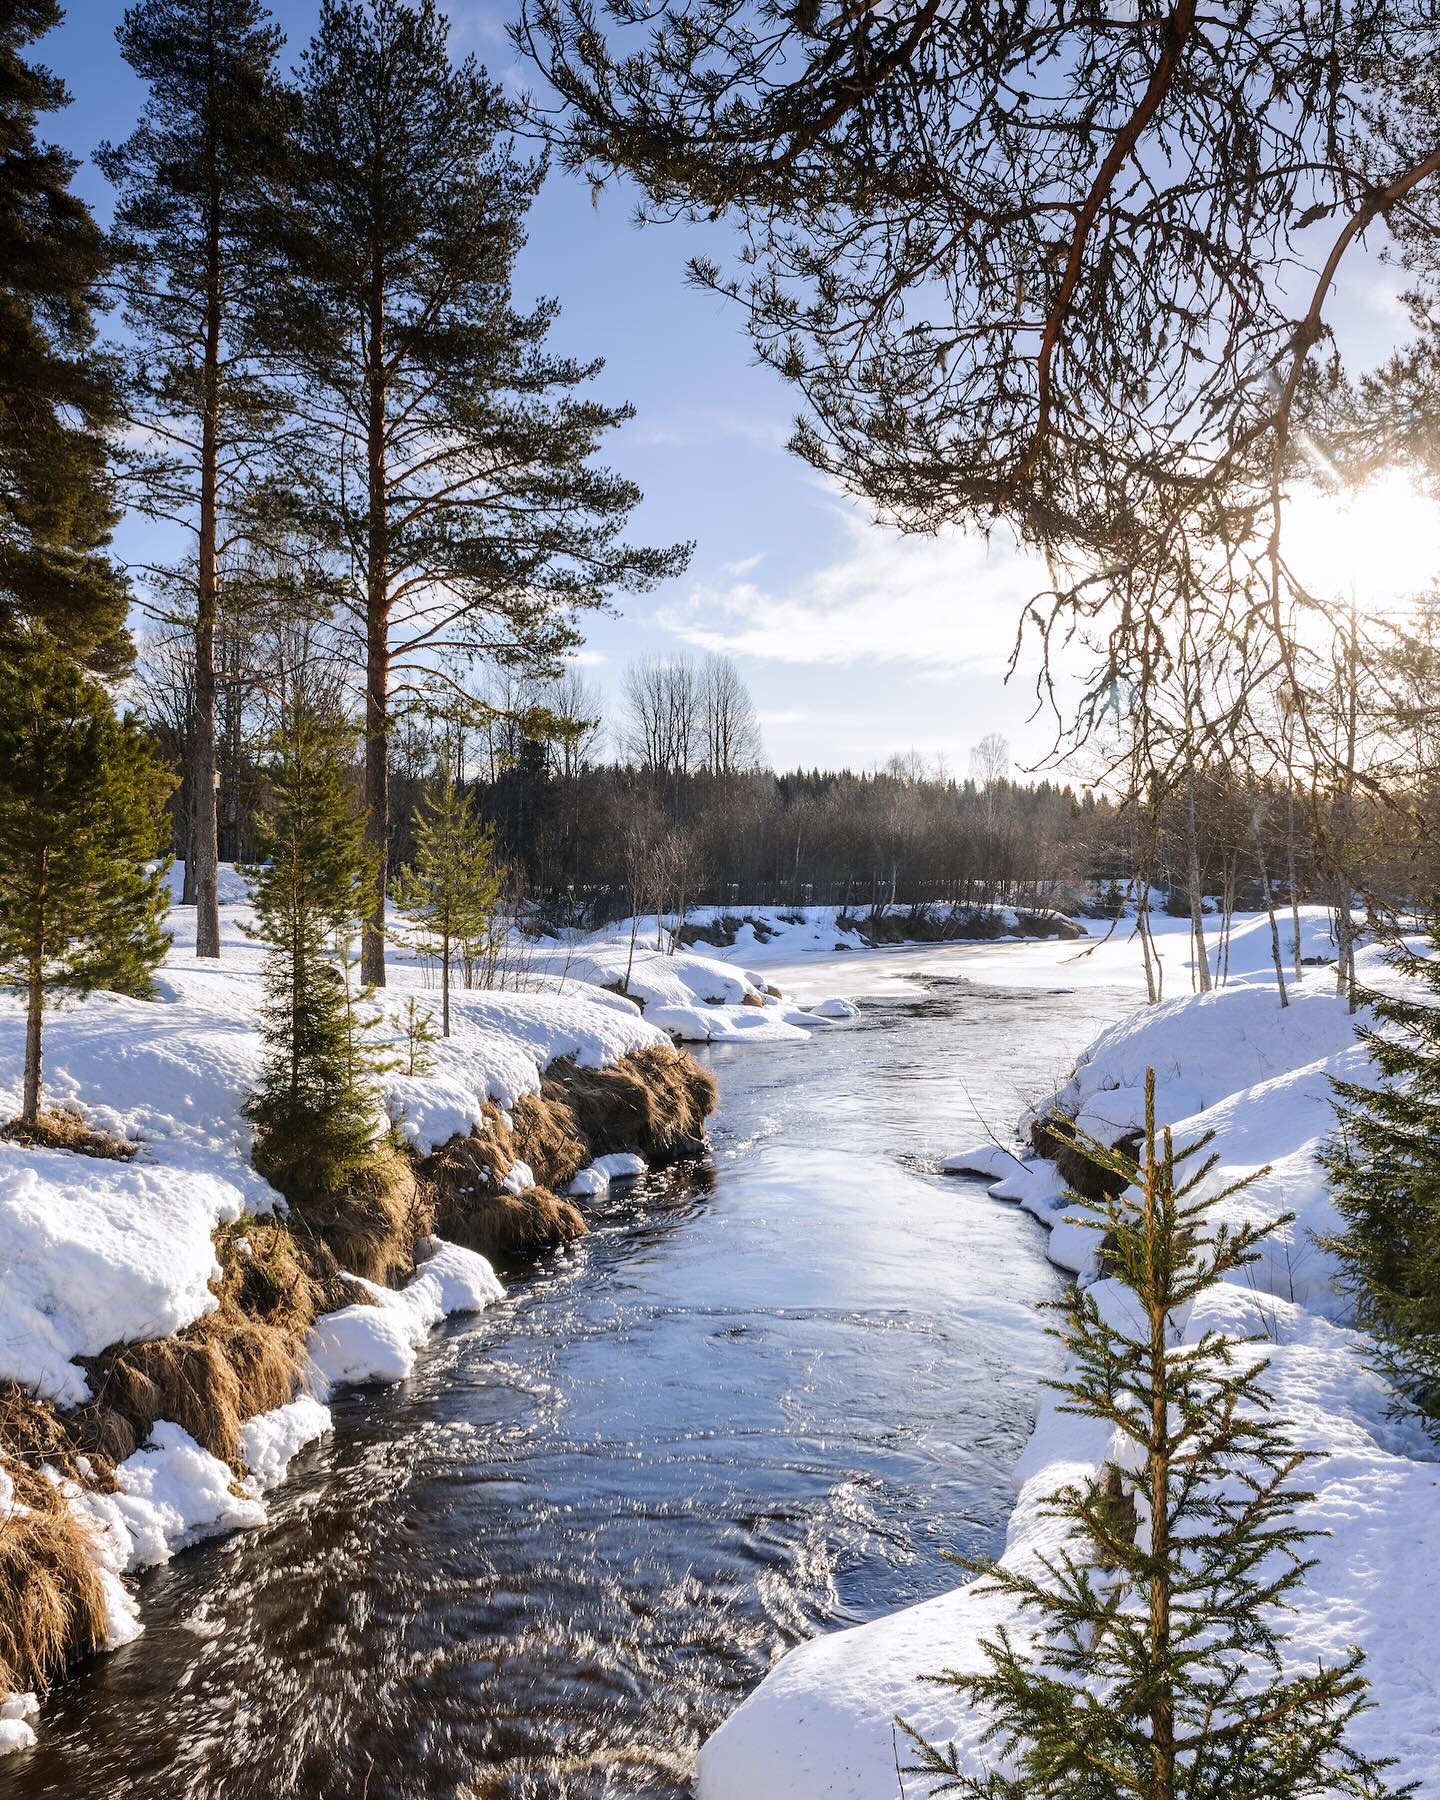 Wishing everyone a very Merry Christmas  ...#ulfnordfjell #sweden🇸🇪 #swedishgarden #swedishgardens #gardenphotography #gardenphotographer #christmas #snow #swedenwinter #wintergarden